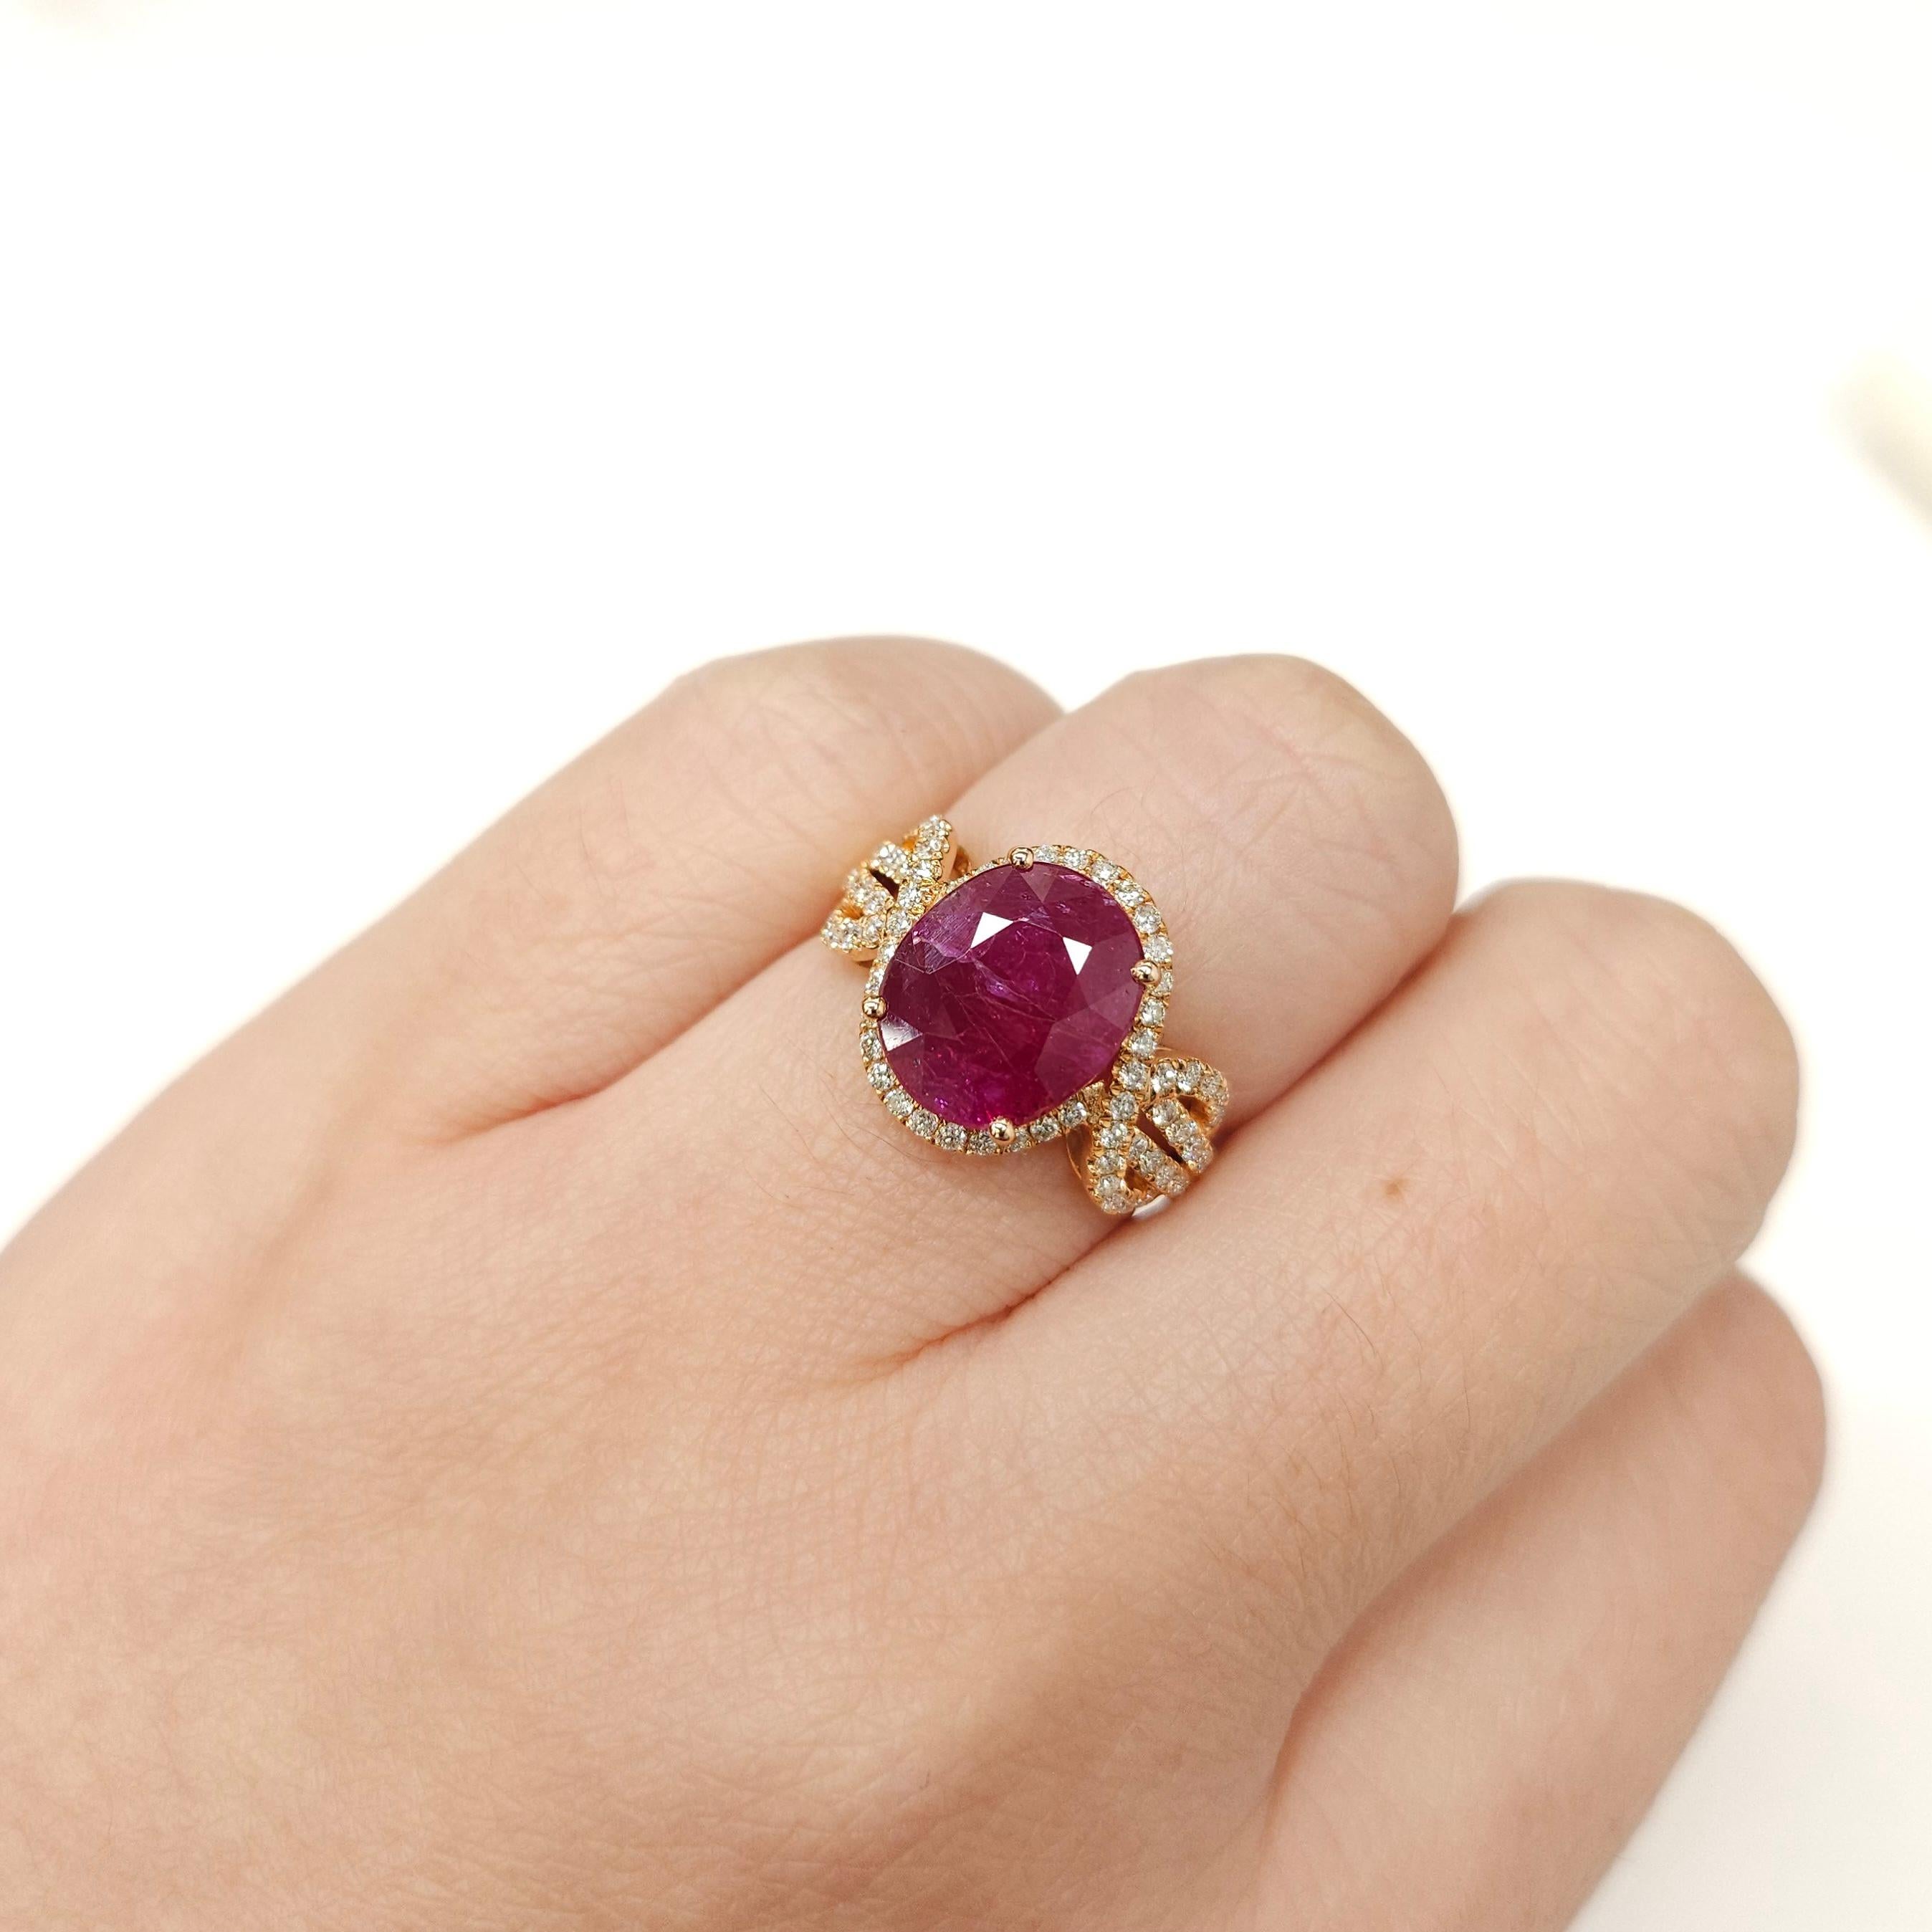 Modern IGI Certified 4.02 Carat Ruby & Diamond Ring in 18K Rose Gold For Sale